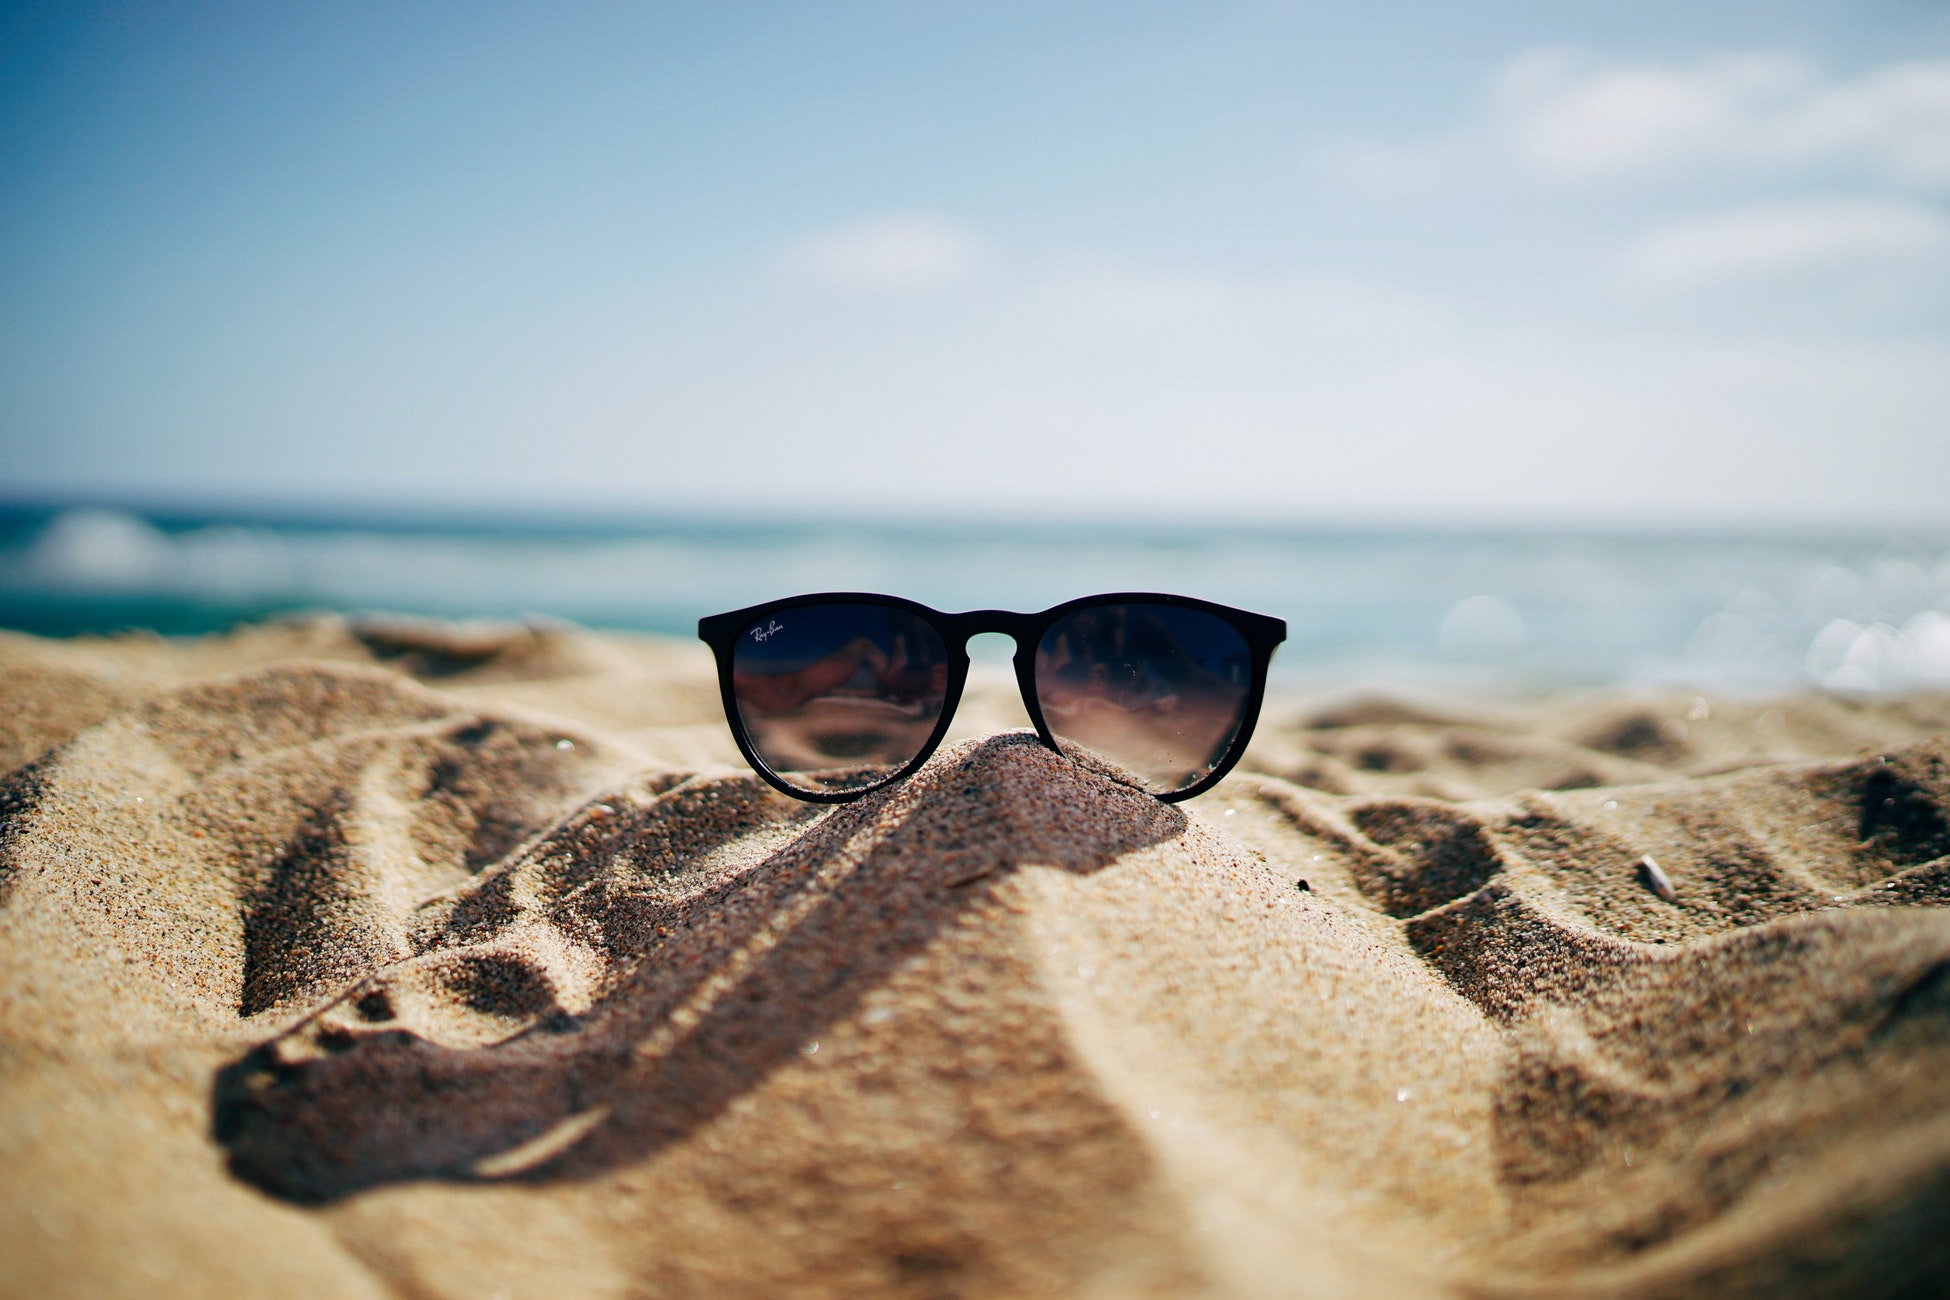 image: sunglasses sitting on sand at beach